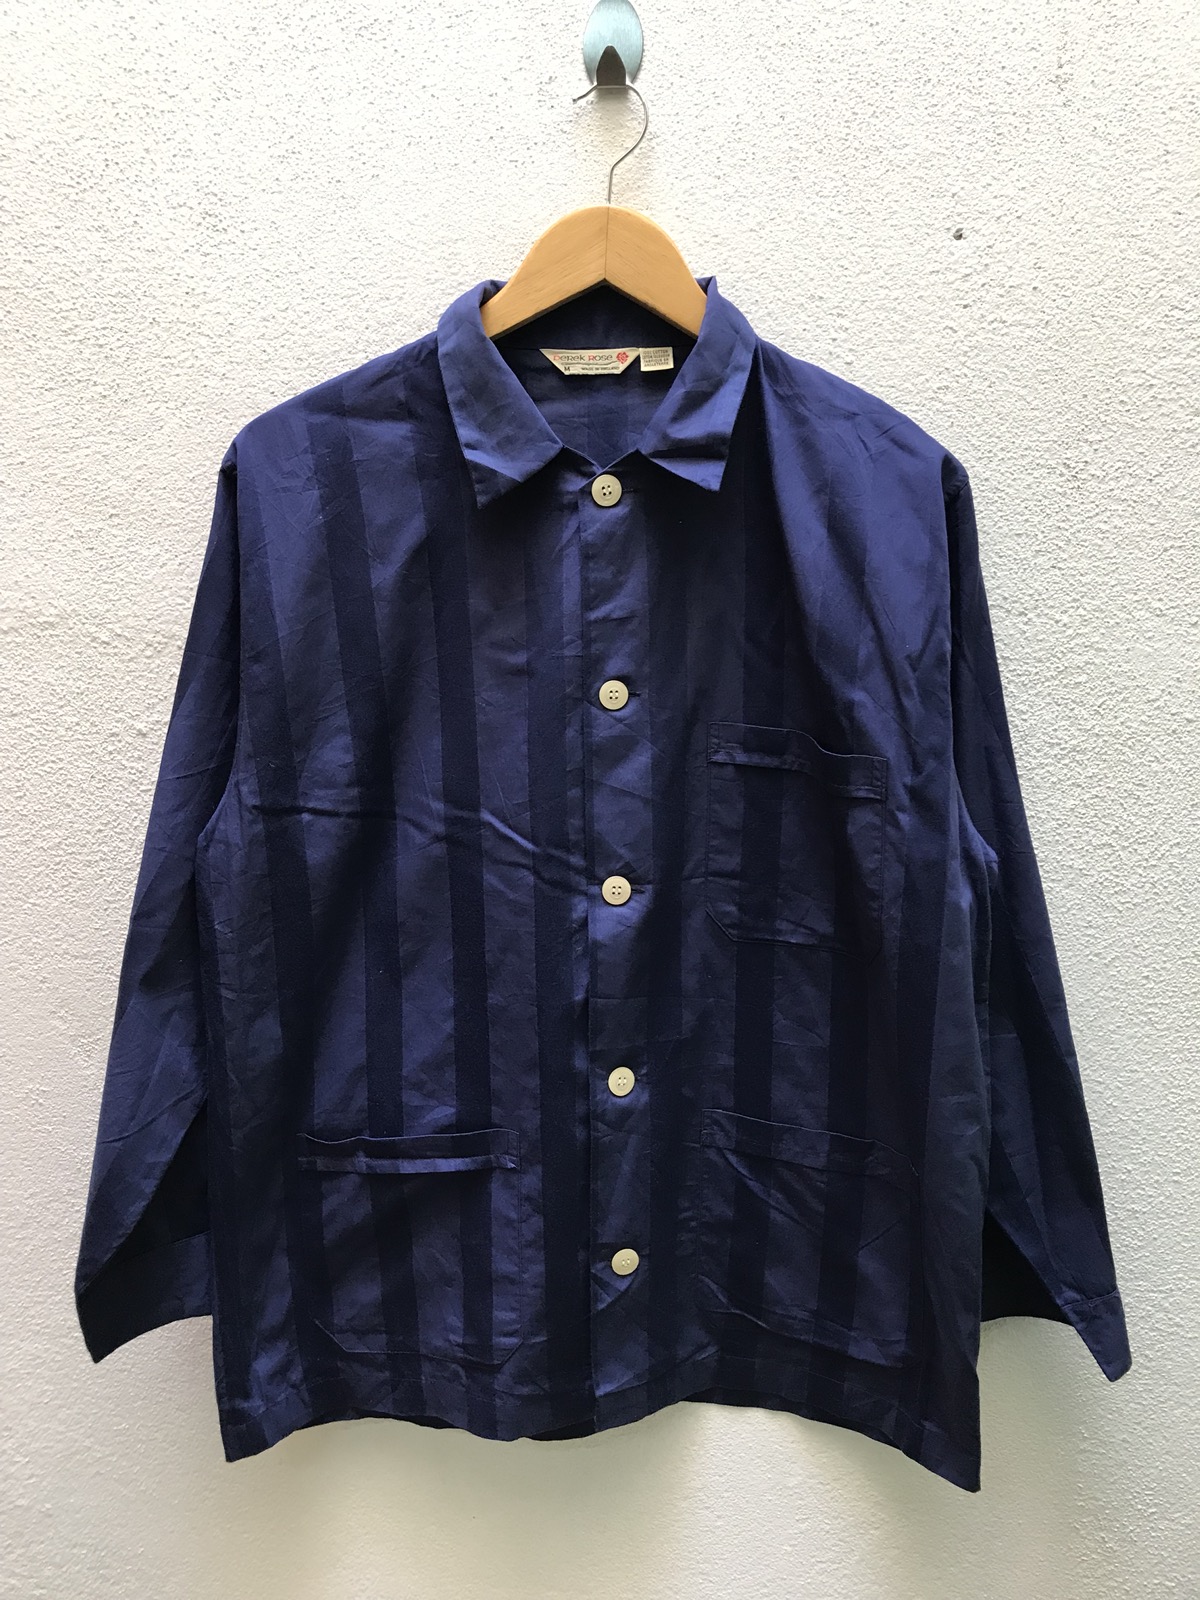 🔥💢 Derek Rose Navy Blue Shirt Made In England - 1